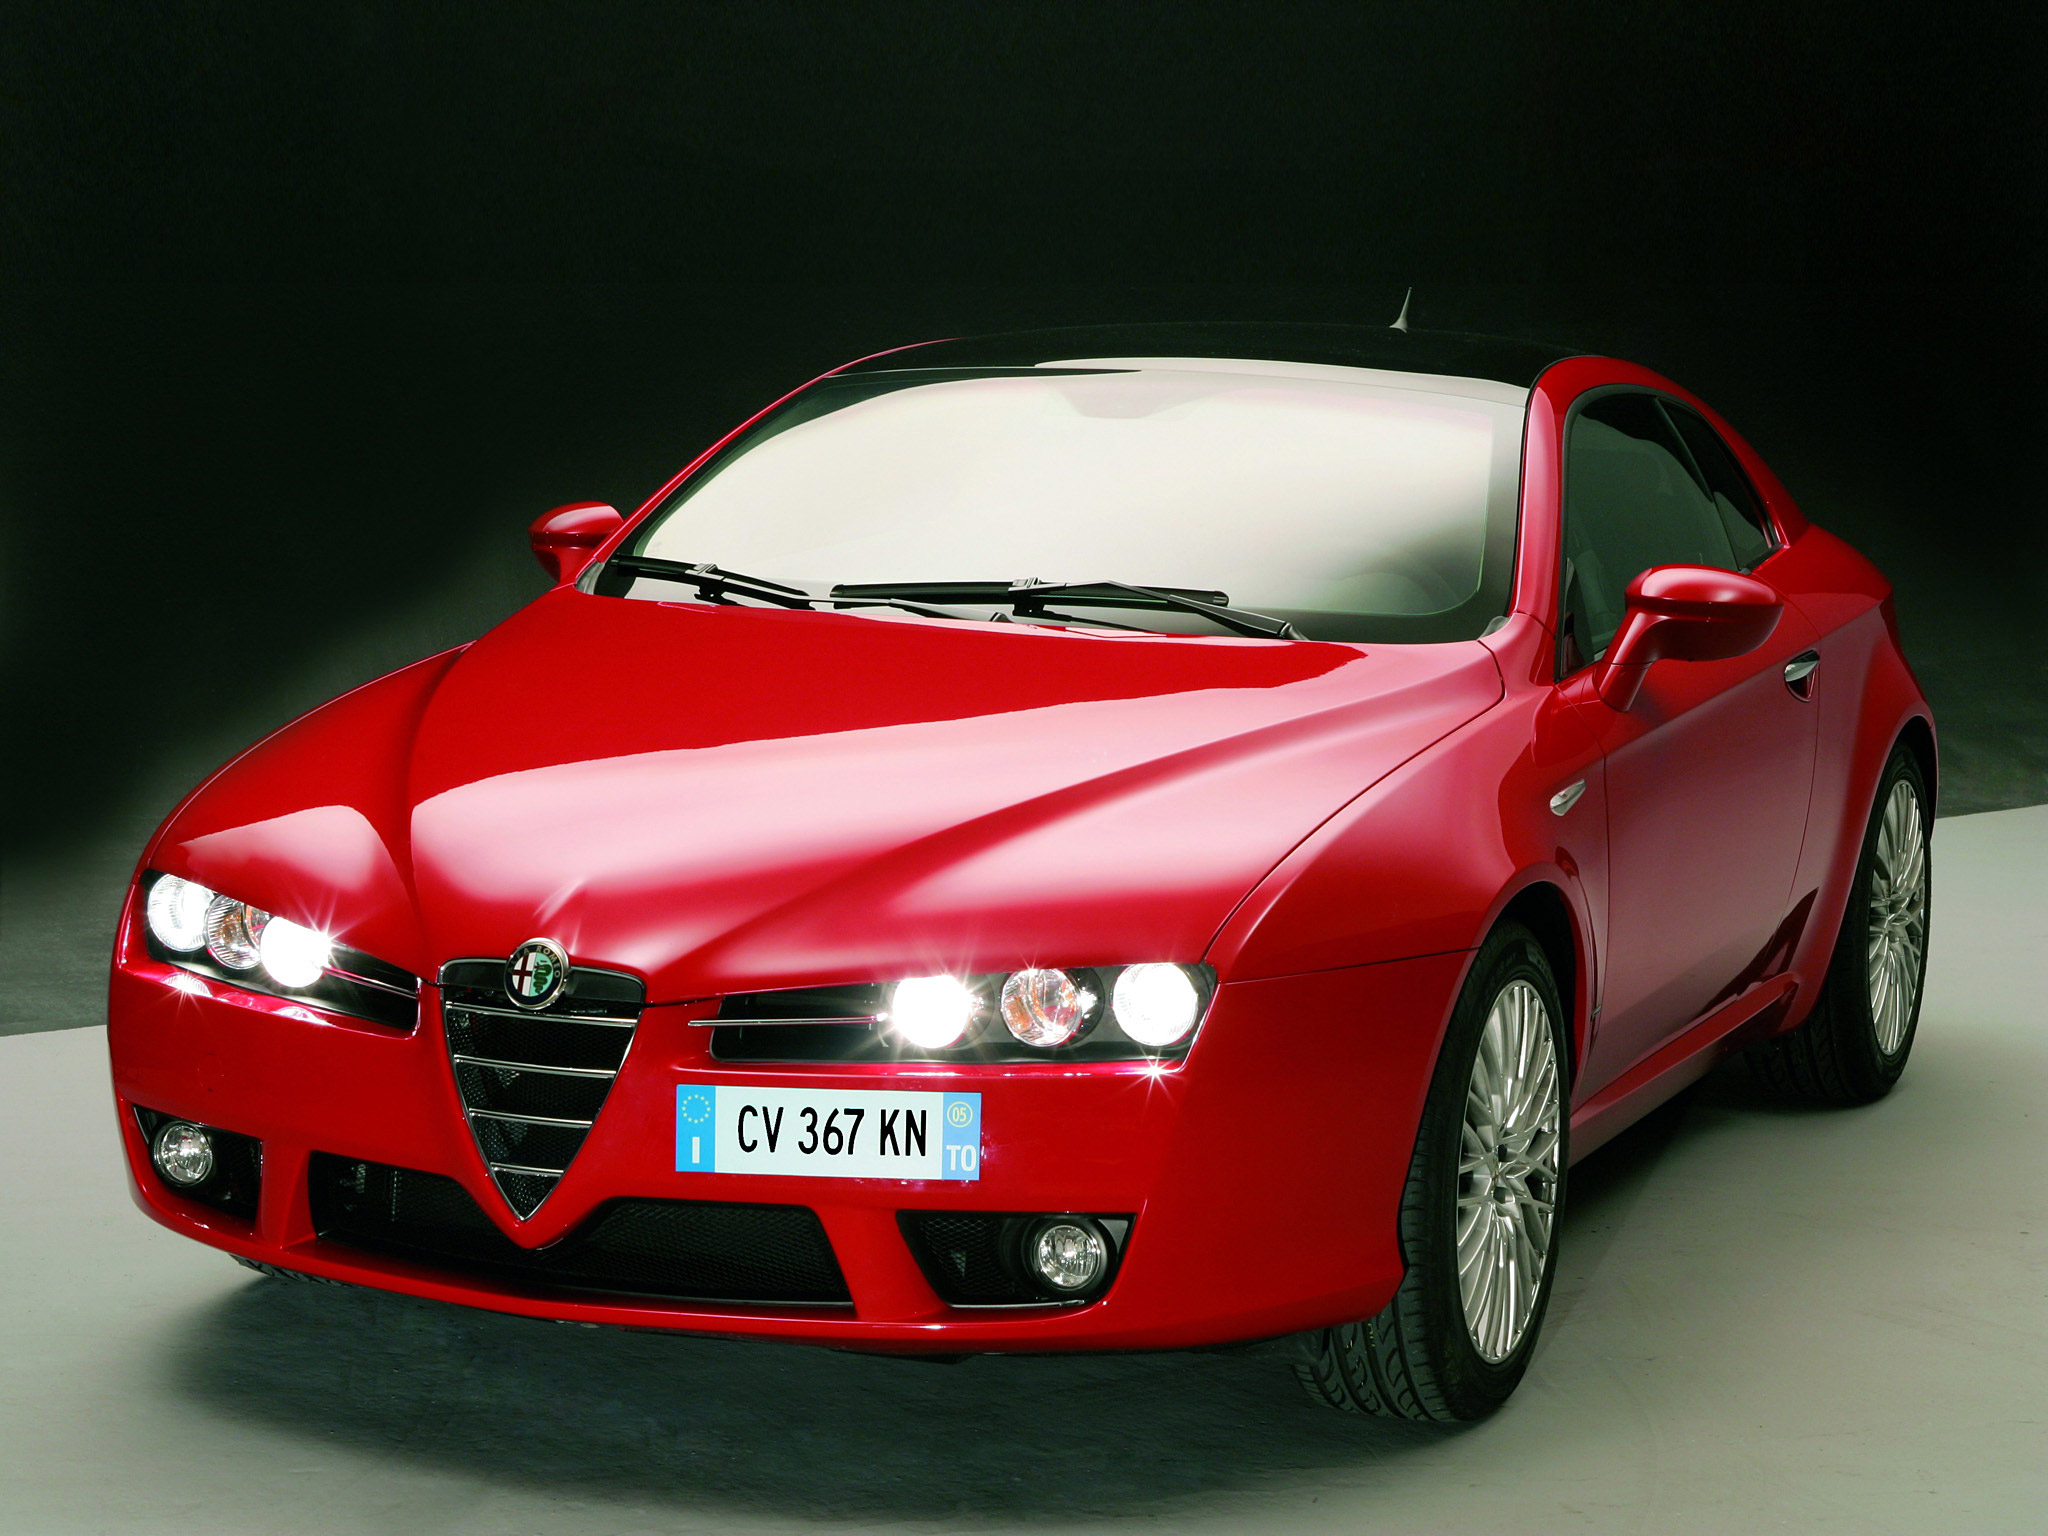  2005 Alfa Romeo Brera Wallpaper.